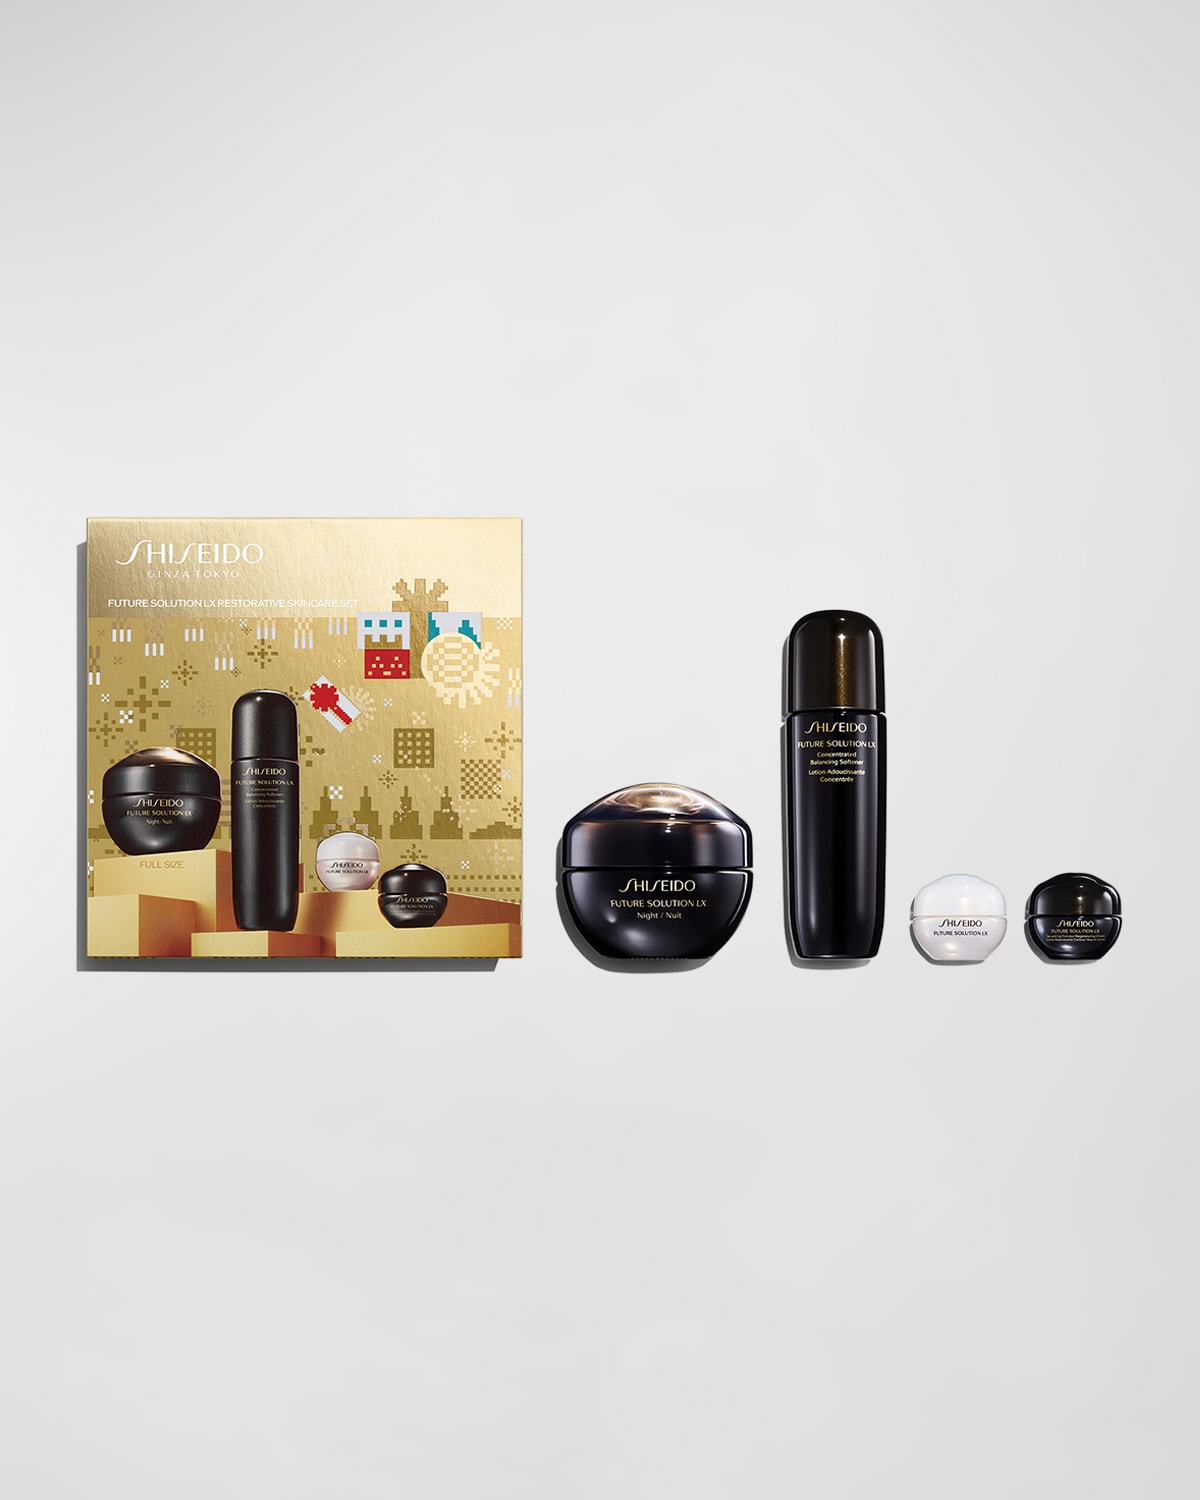 Shiseido Limited Edition Future Solution Lx Restorative Skincare Set ($426 Value)